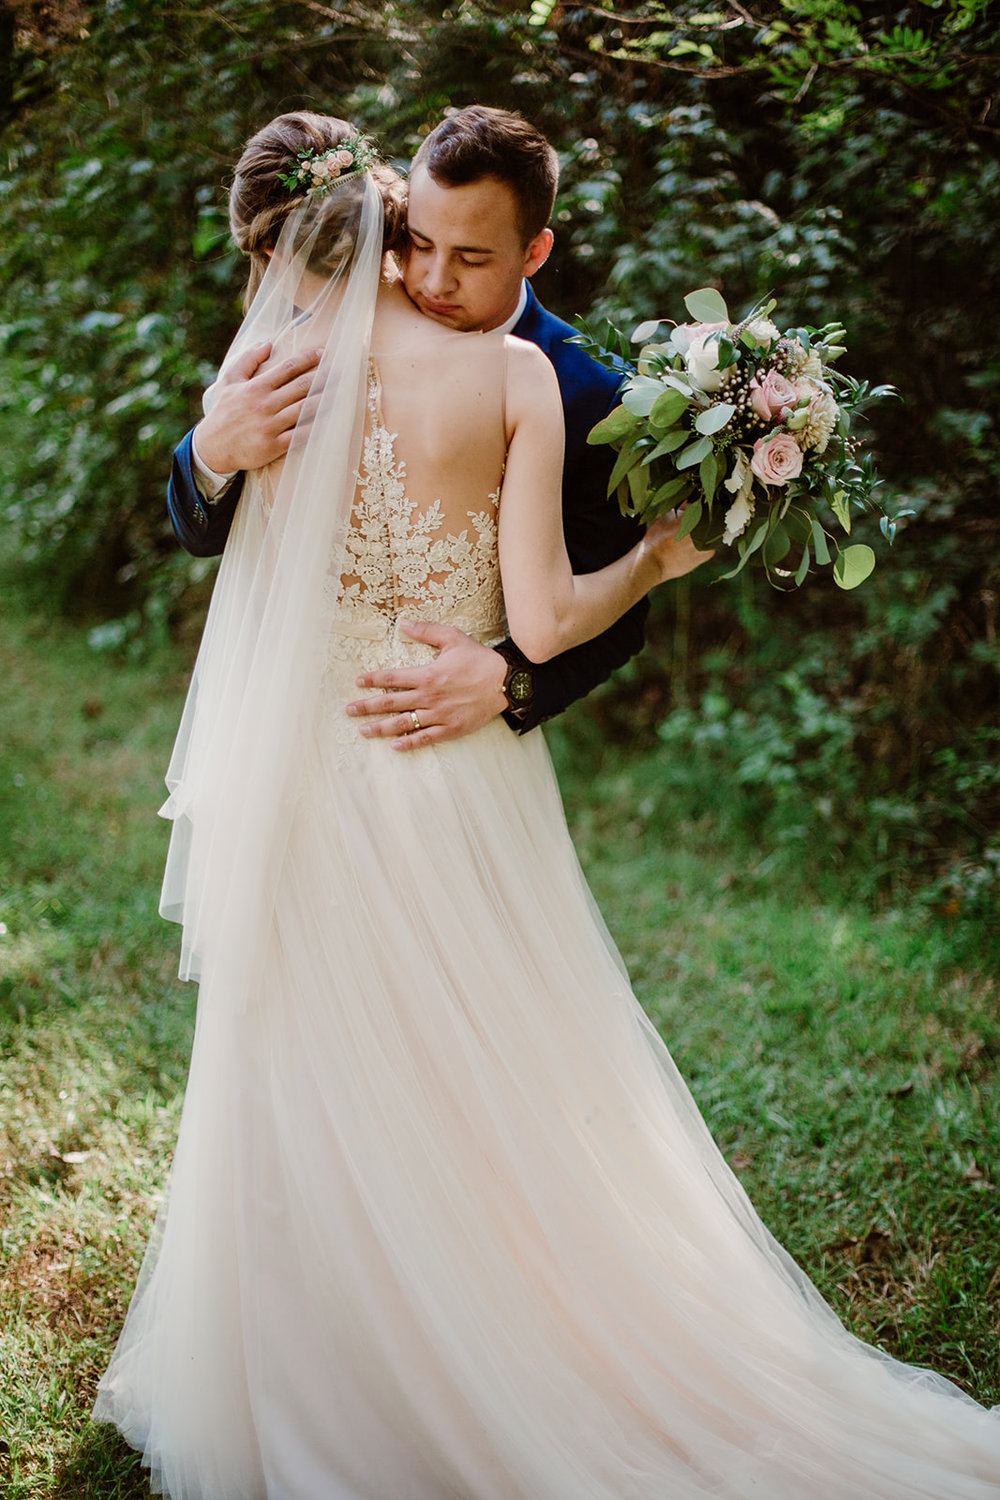  Groom hugging bride | Intimate Wedding | Fredericksburg, VA | Sarah Mattozzi Photography 